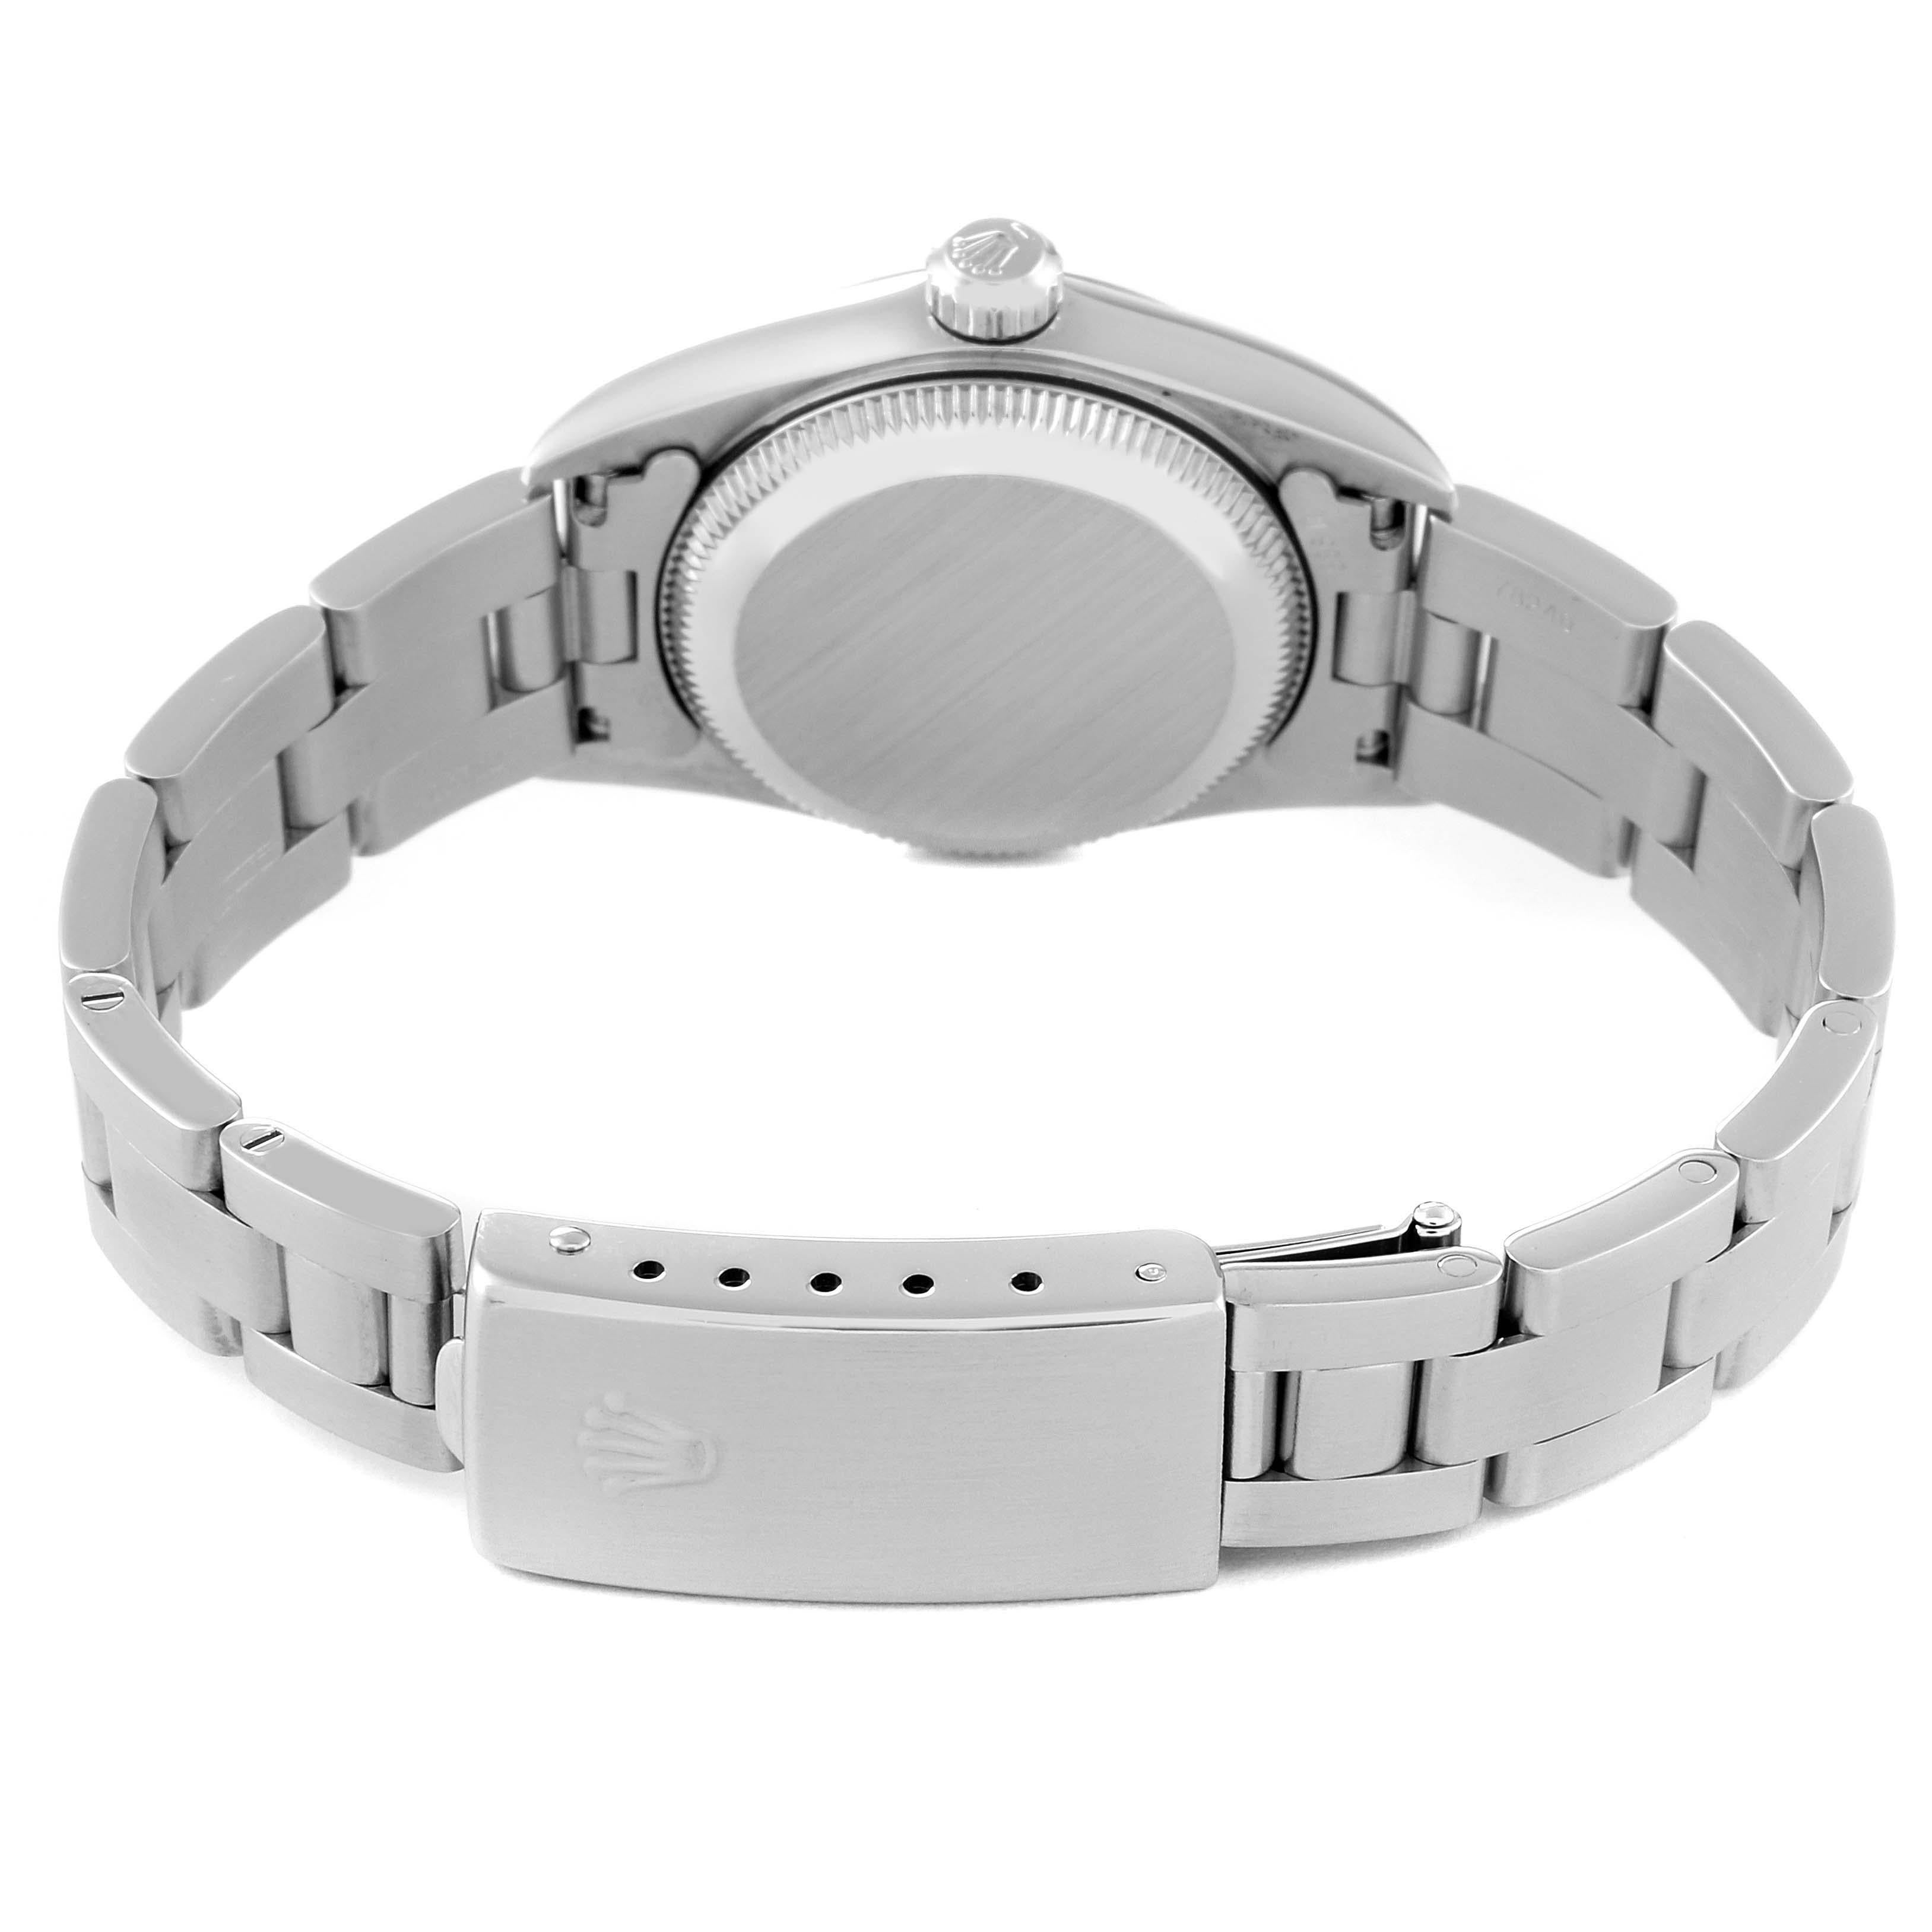 Rolex Oyster Perpetual Nondate Black Dial Steel Ladies Watch 76080 5